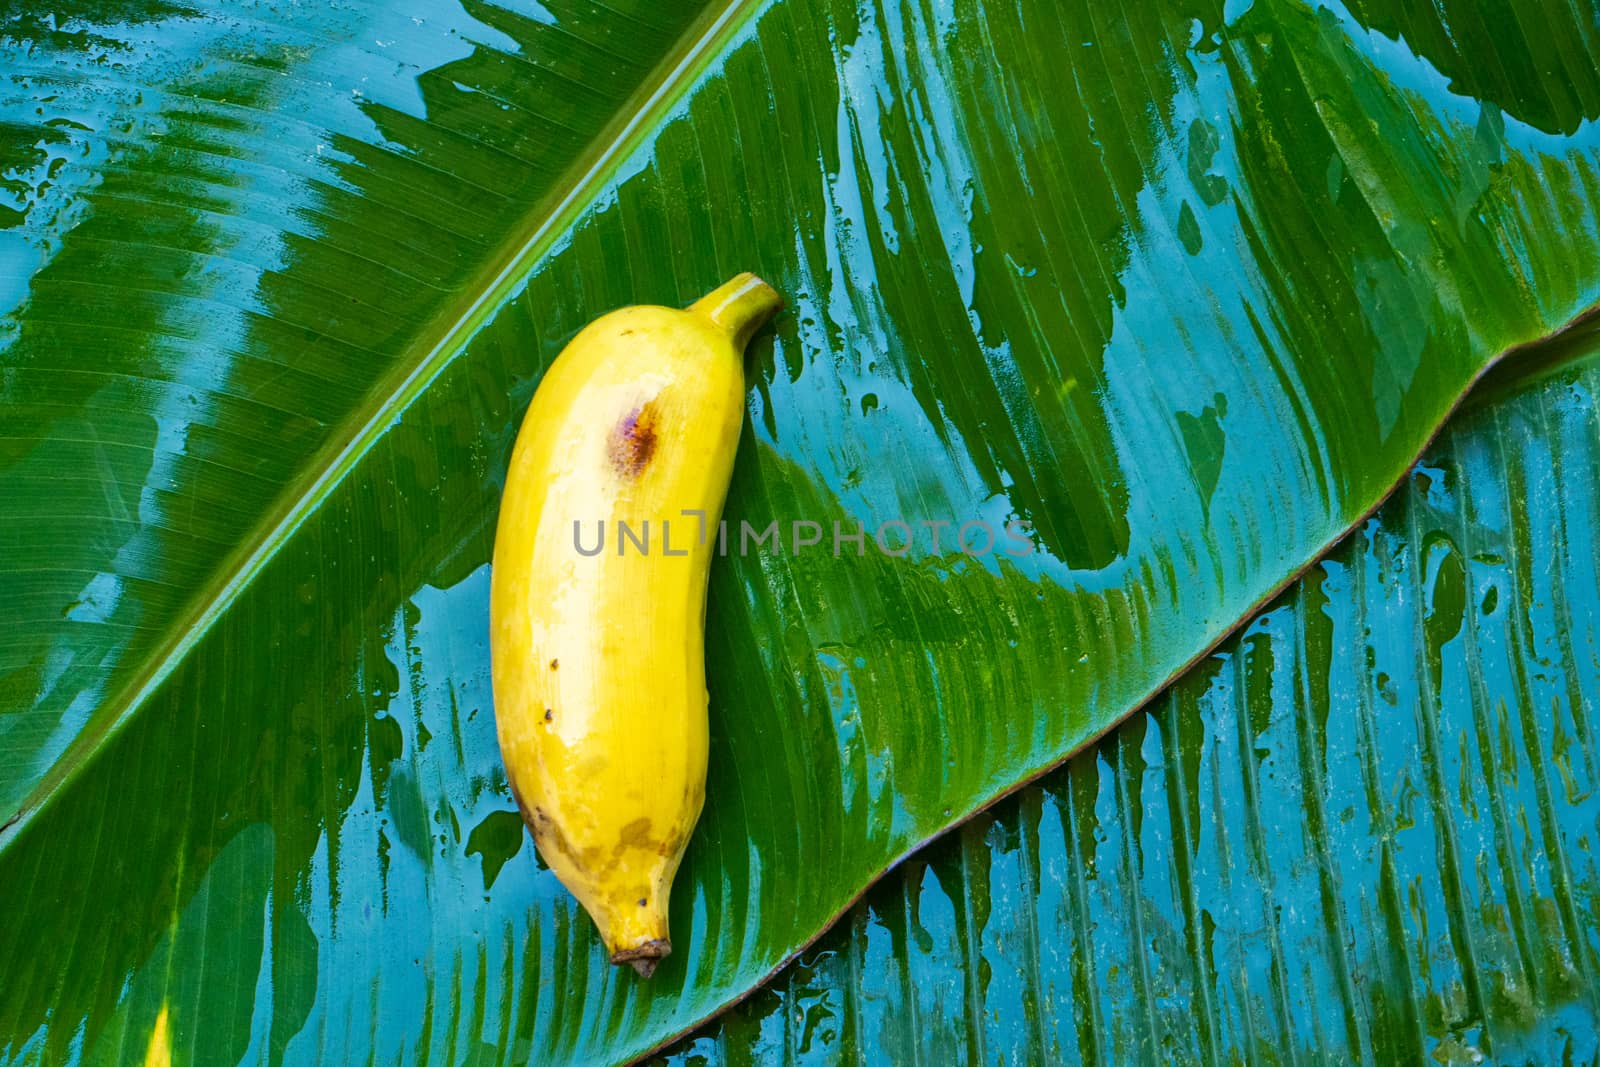 Ripe yellow banana on a wet banana leaf